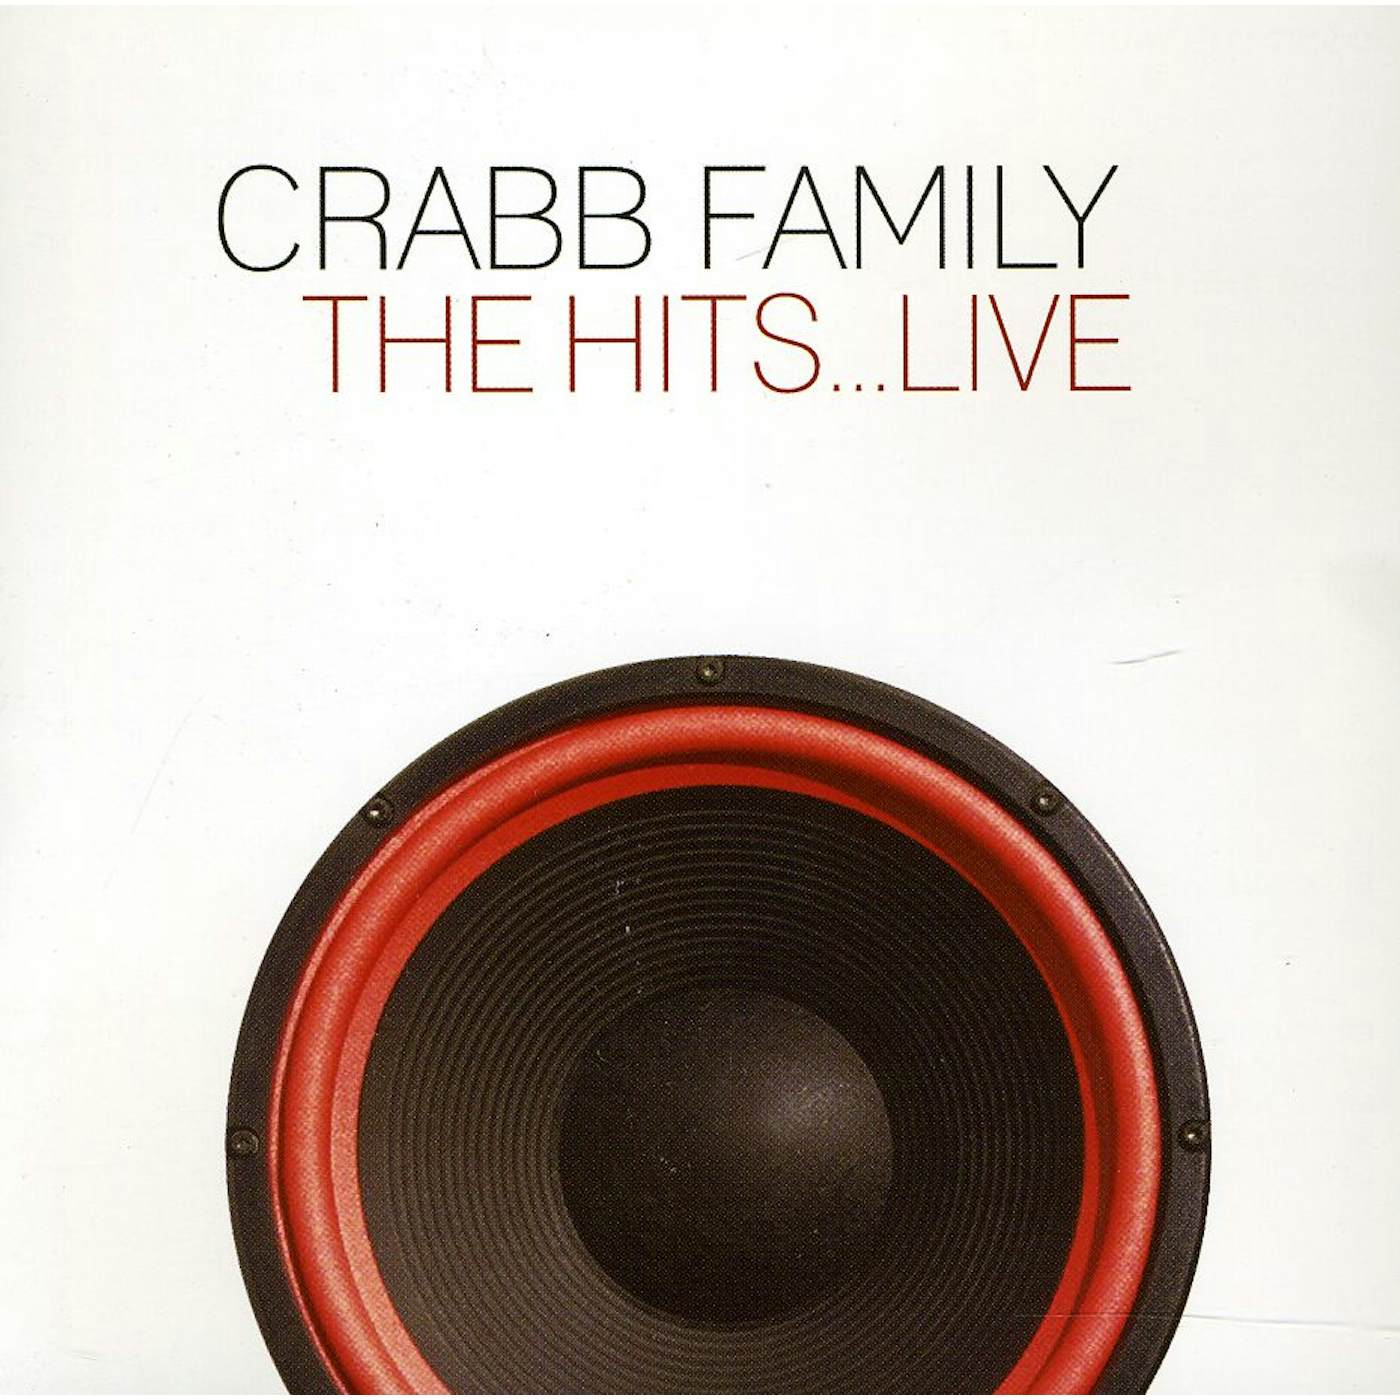 The Crabb Family HITS LIVE CD